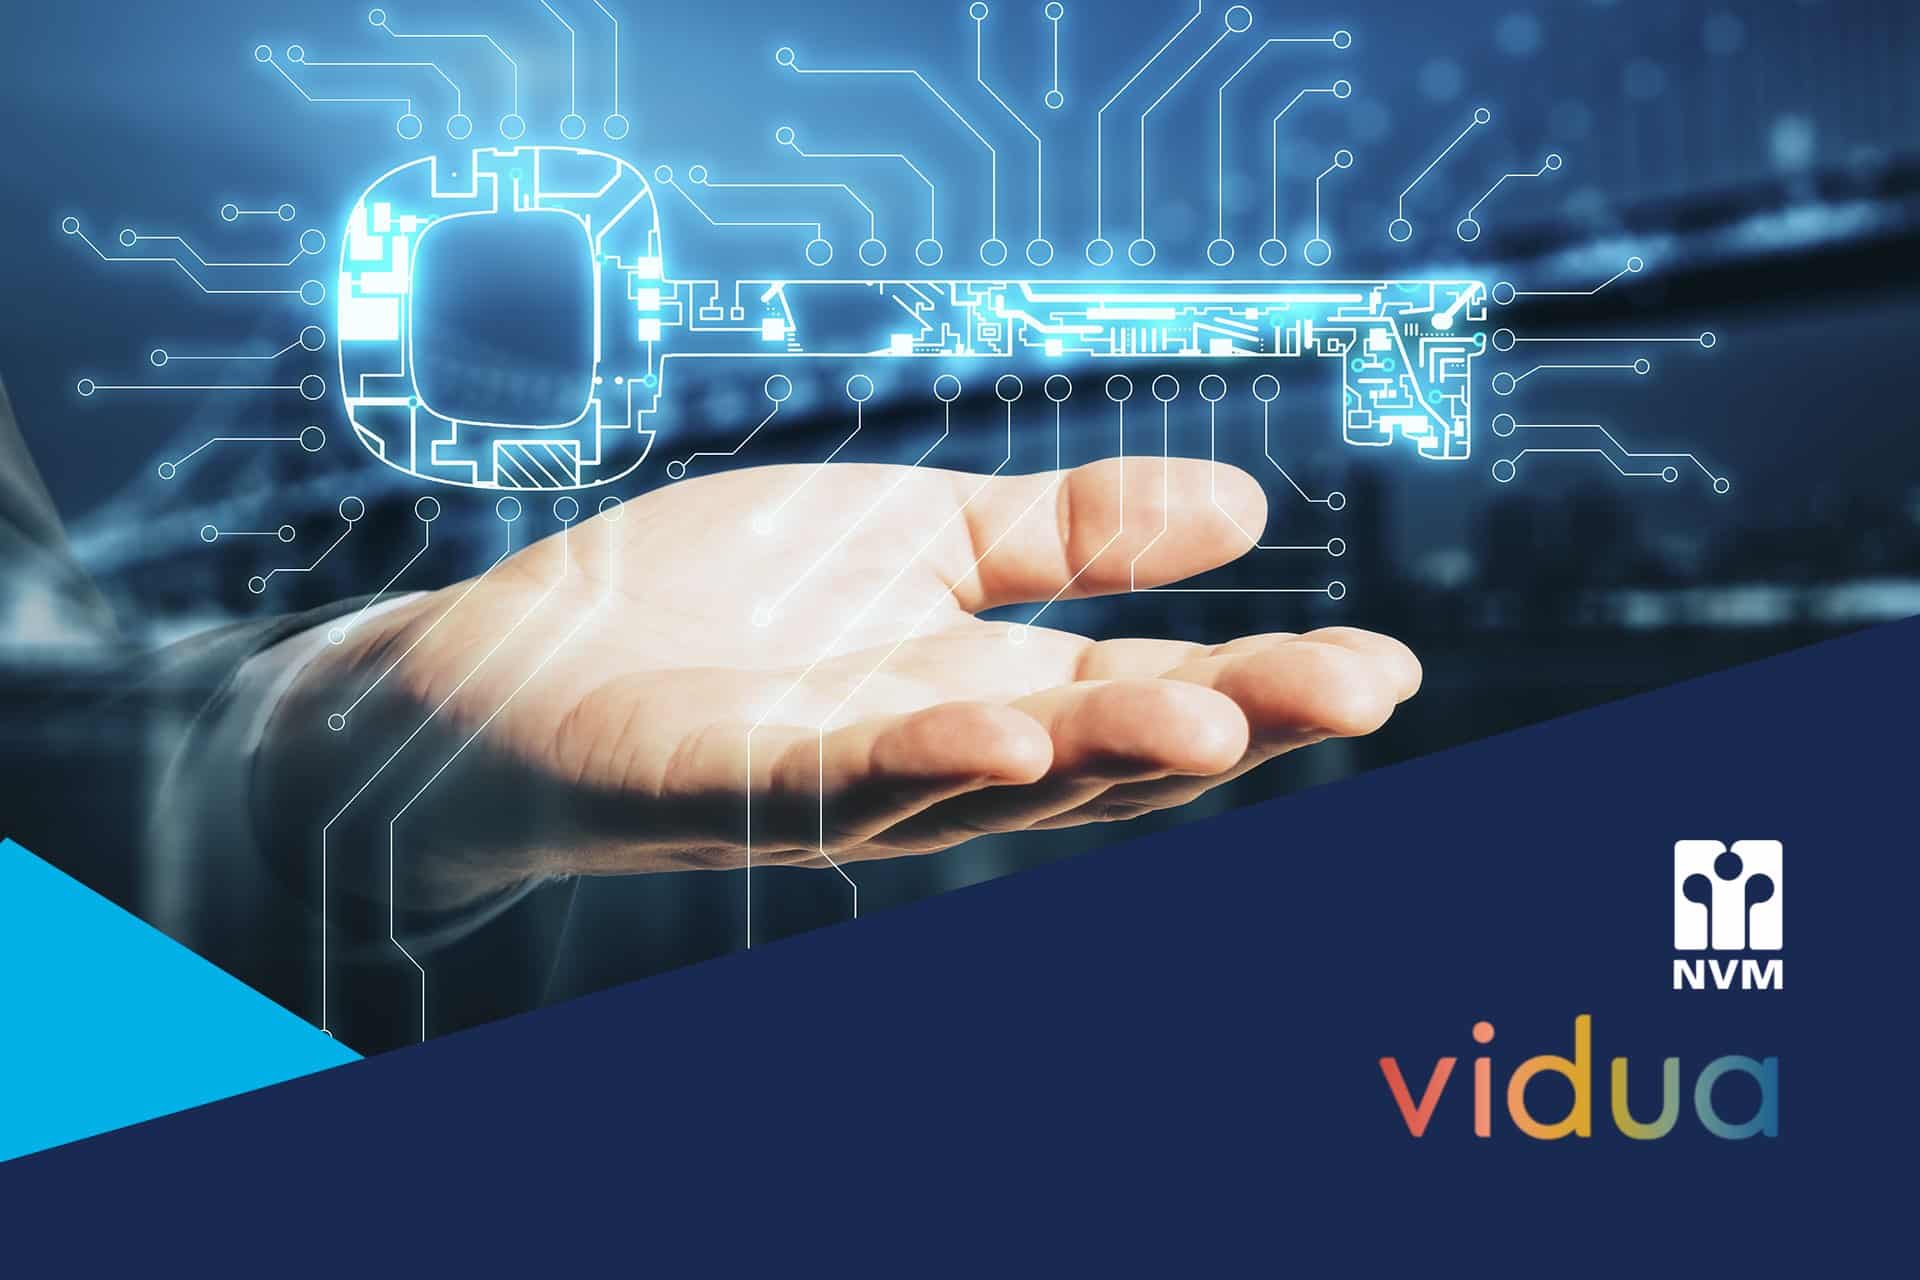 NVM en Cleverbase lanceren Vidua: digitale ID